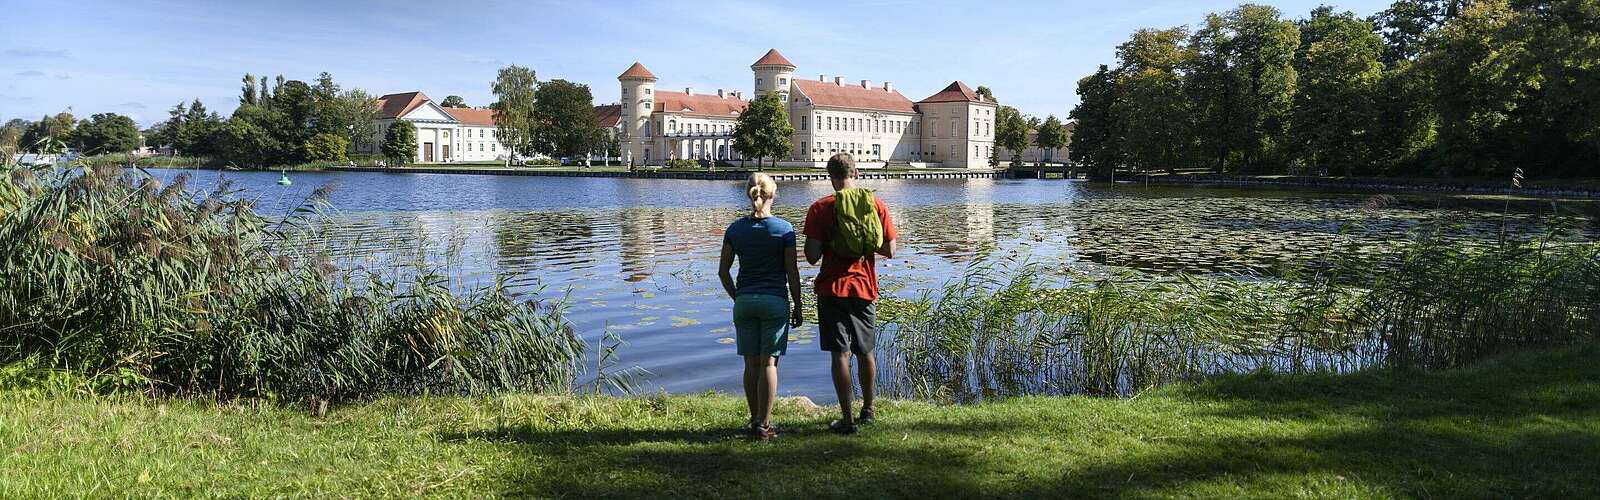 Besucher am Ufer des Grienericksees vor dem Schloss Rheinsberg,
        
    

        Foto: TMB-Fotoarchiv/Wolfgang Ehn